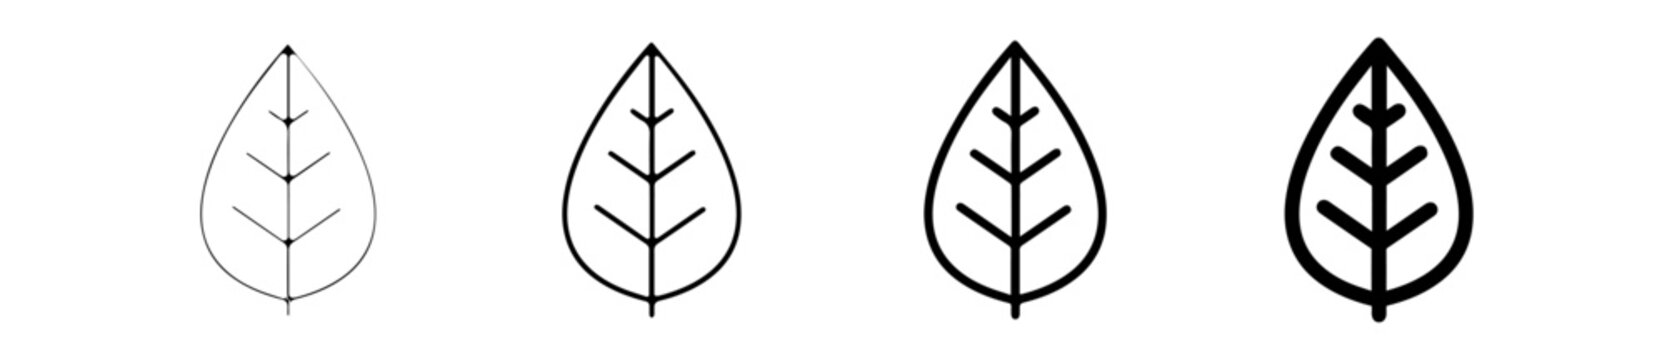 Icones symbole logo feuille arbre detail